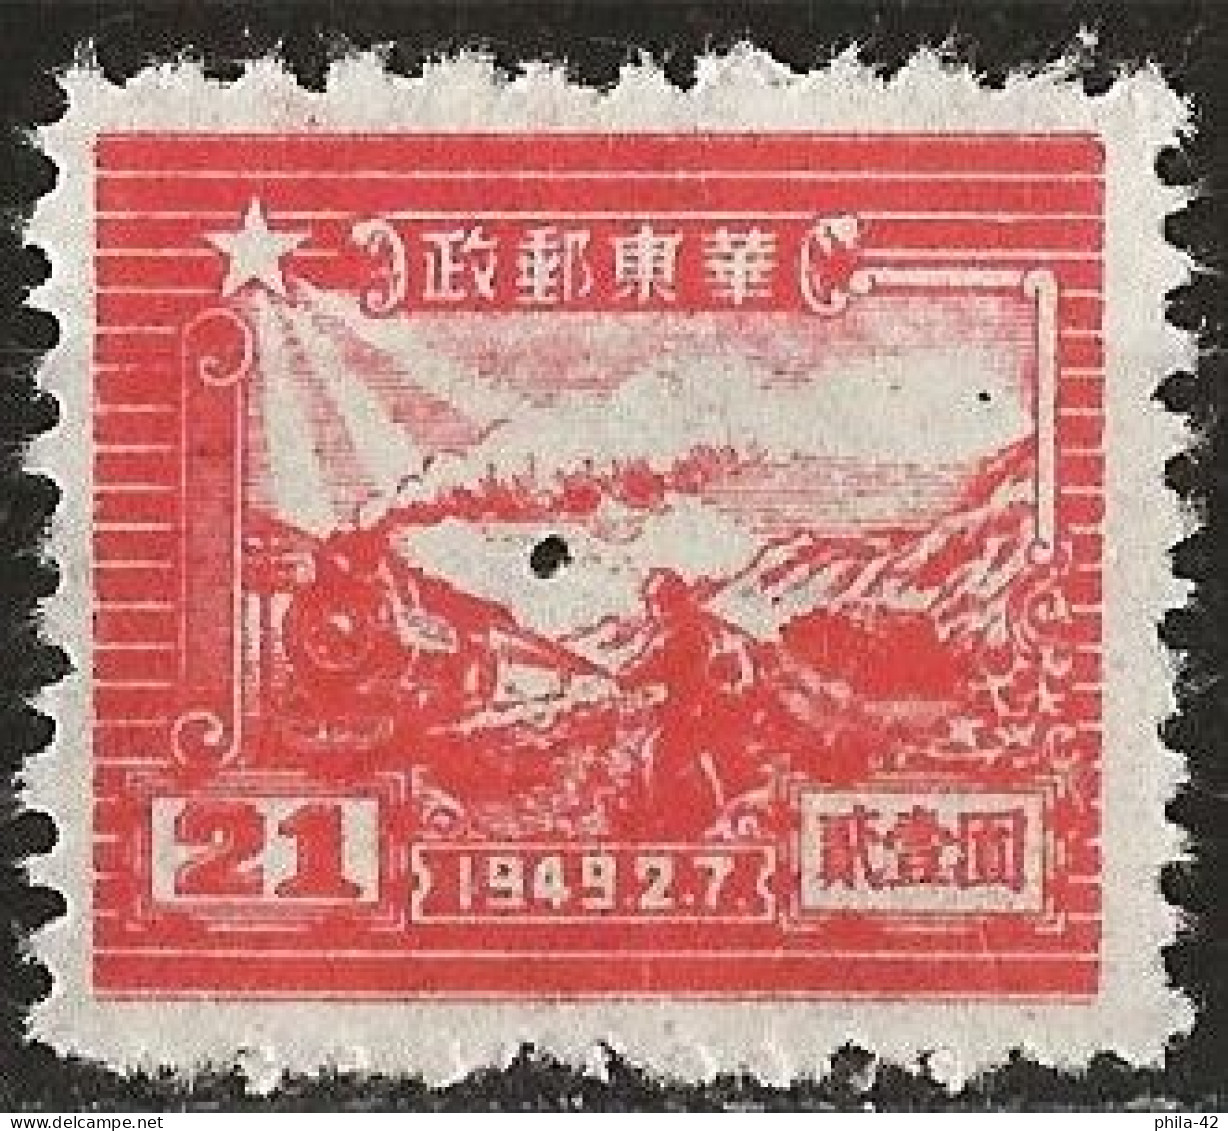 East China 1949 - Mi 24A - YT 20 ( Steam Train & Postal Runner ) MNG - China Oriental 1949-50